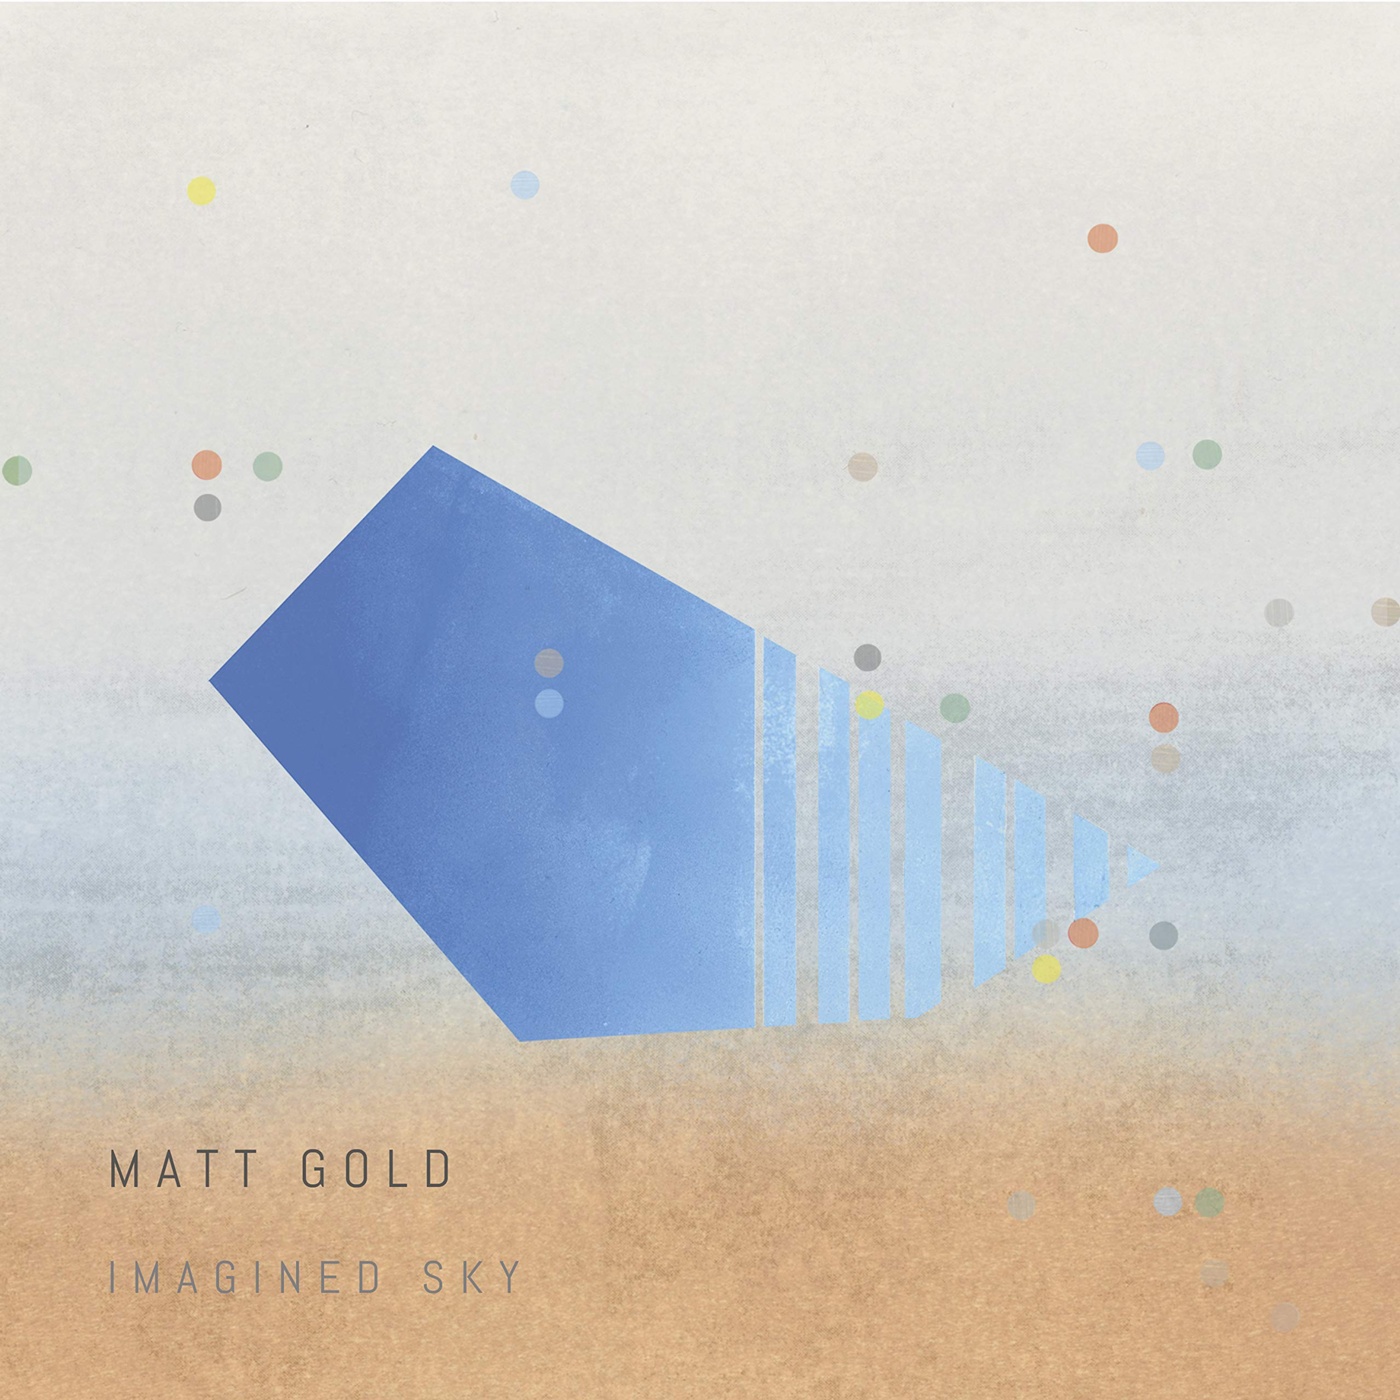 Gold imagine. Matt Gold. Imagine Gold.